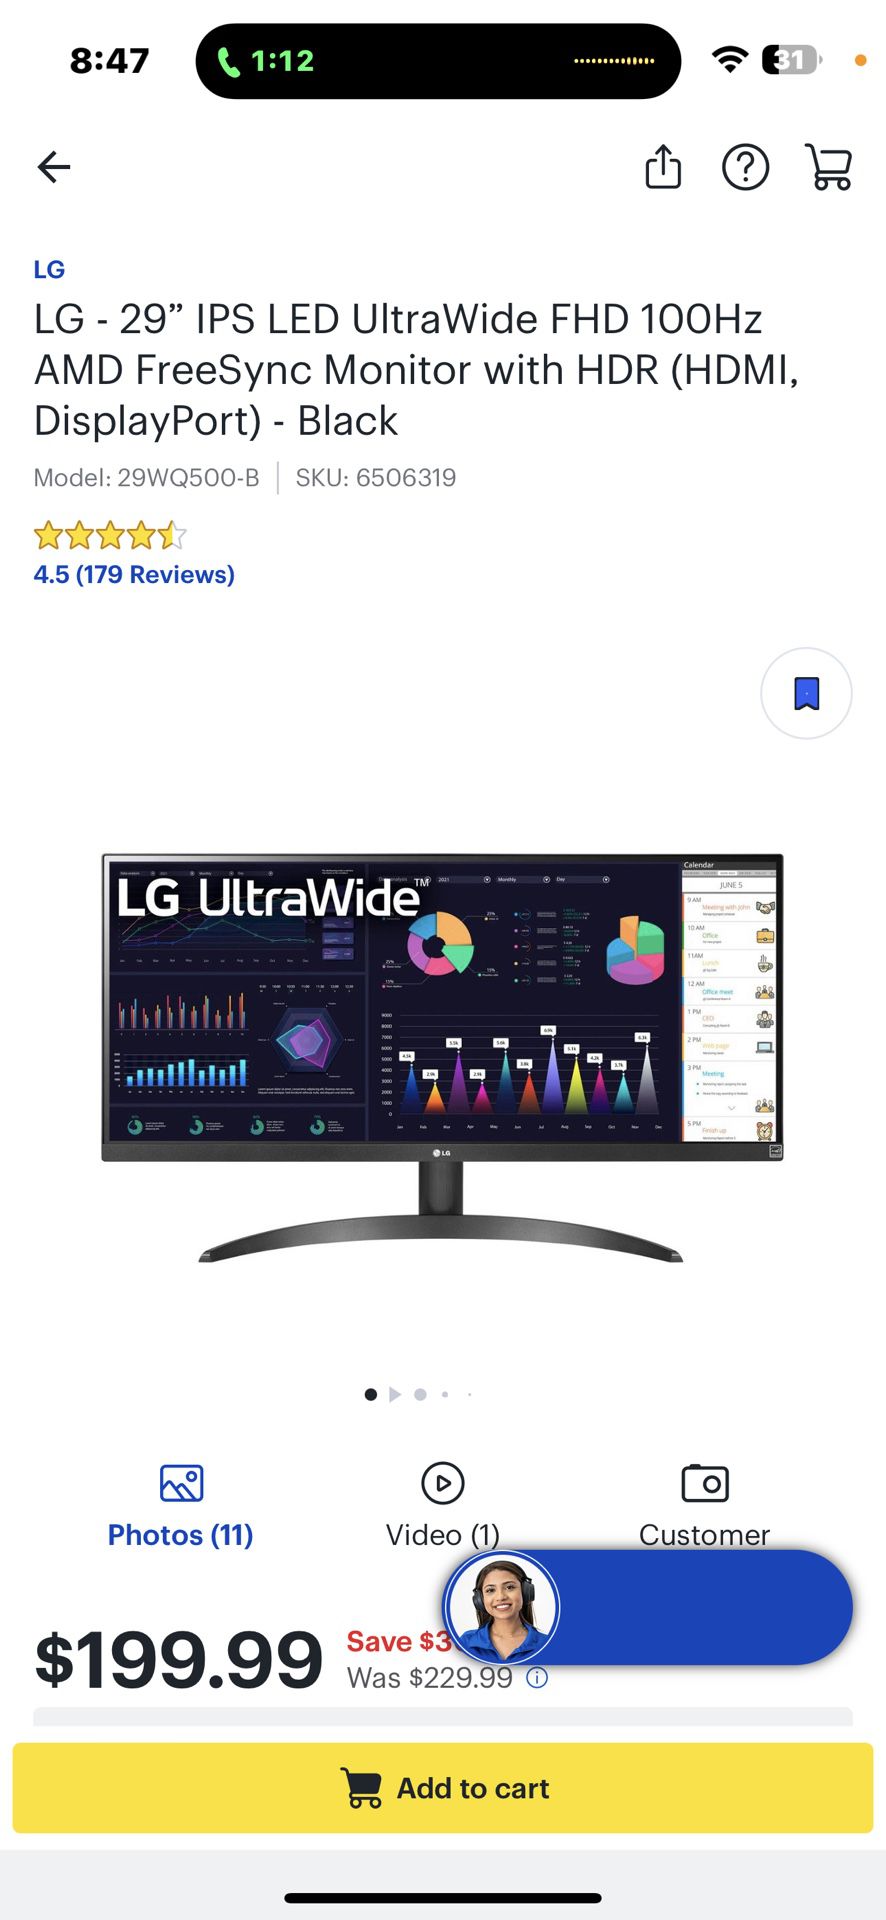 LG - 29" IPS LED UltraWide FHD 100Hz AMD FreeSync Monitor with HDR (HDMI, DisplayPort) - Black